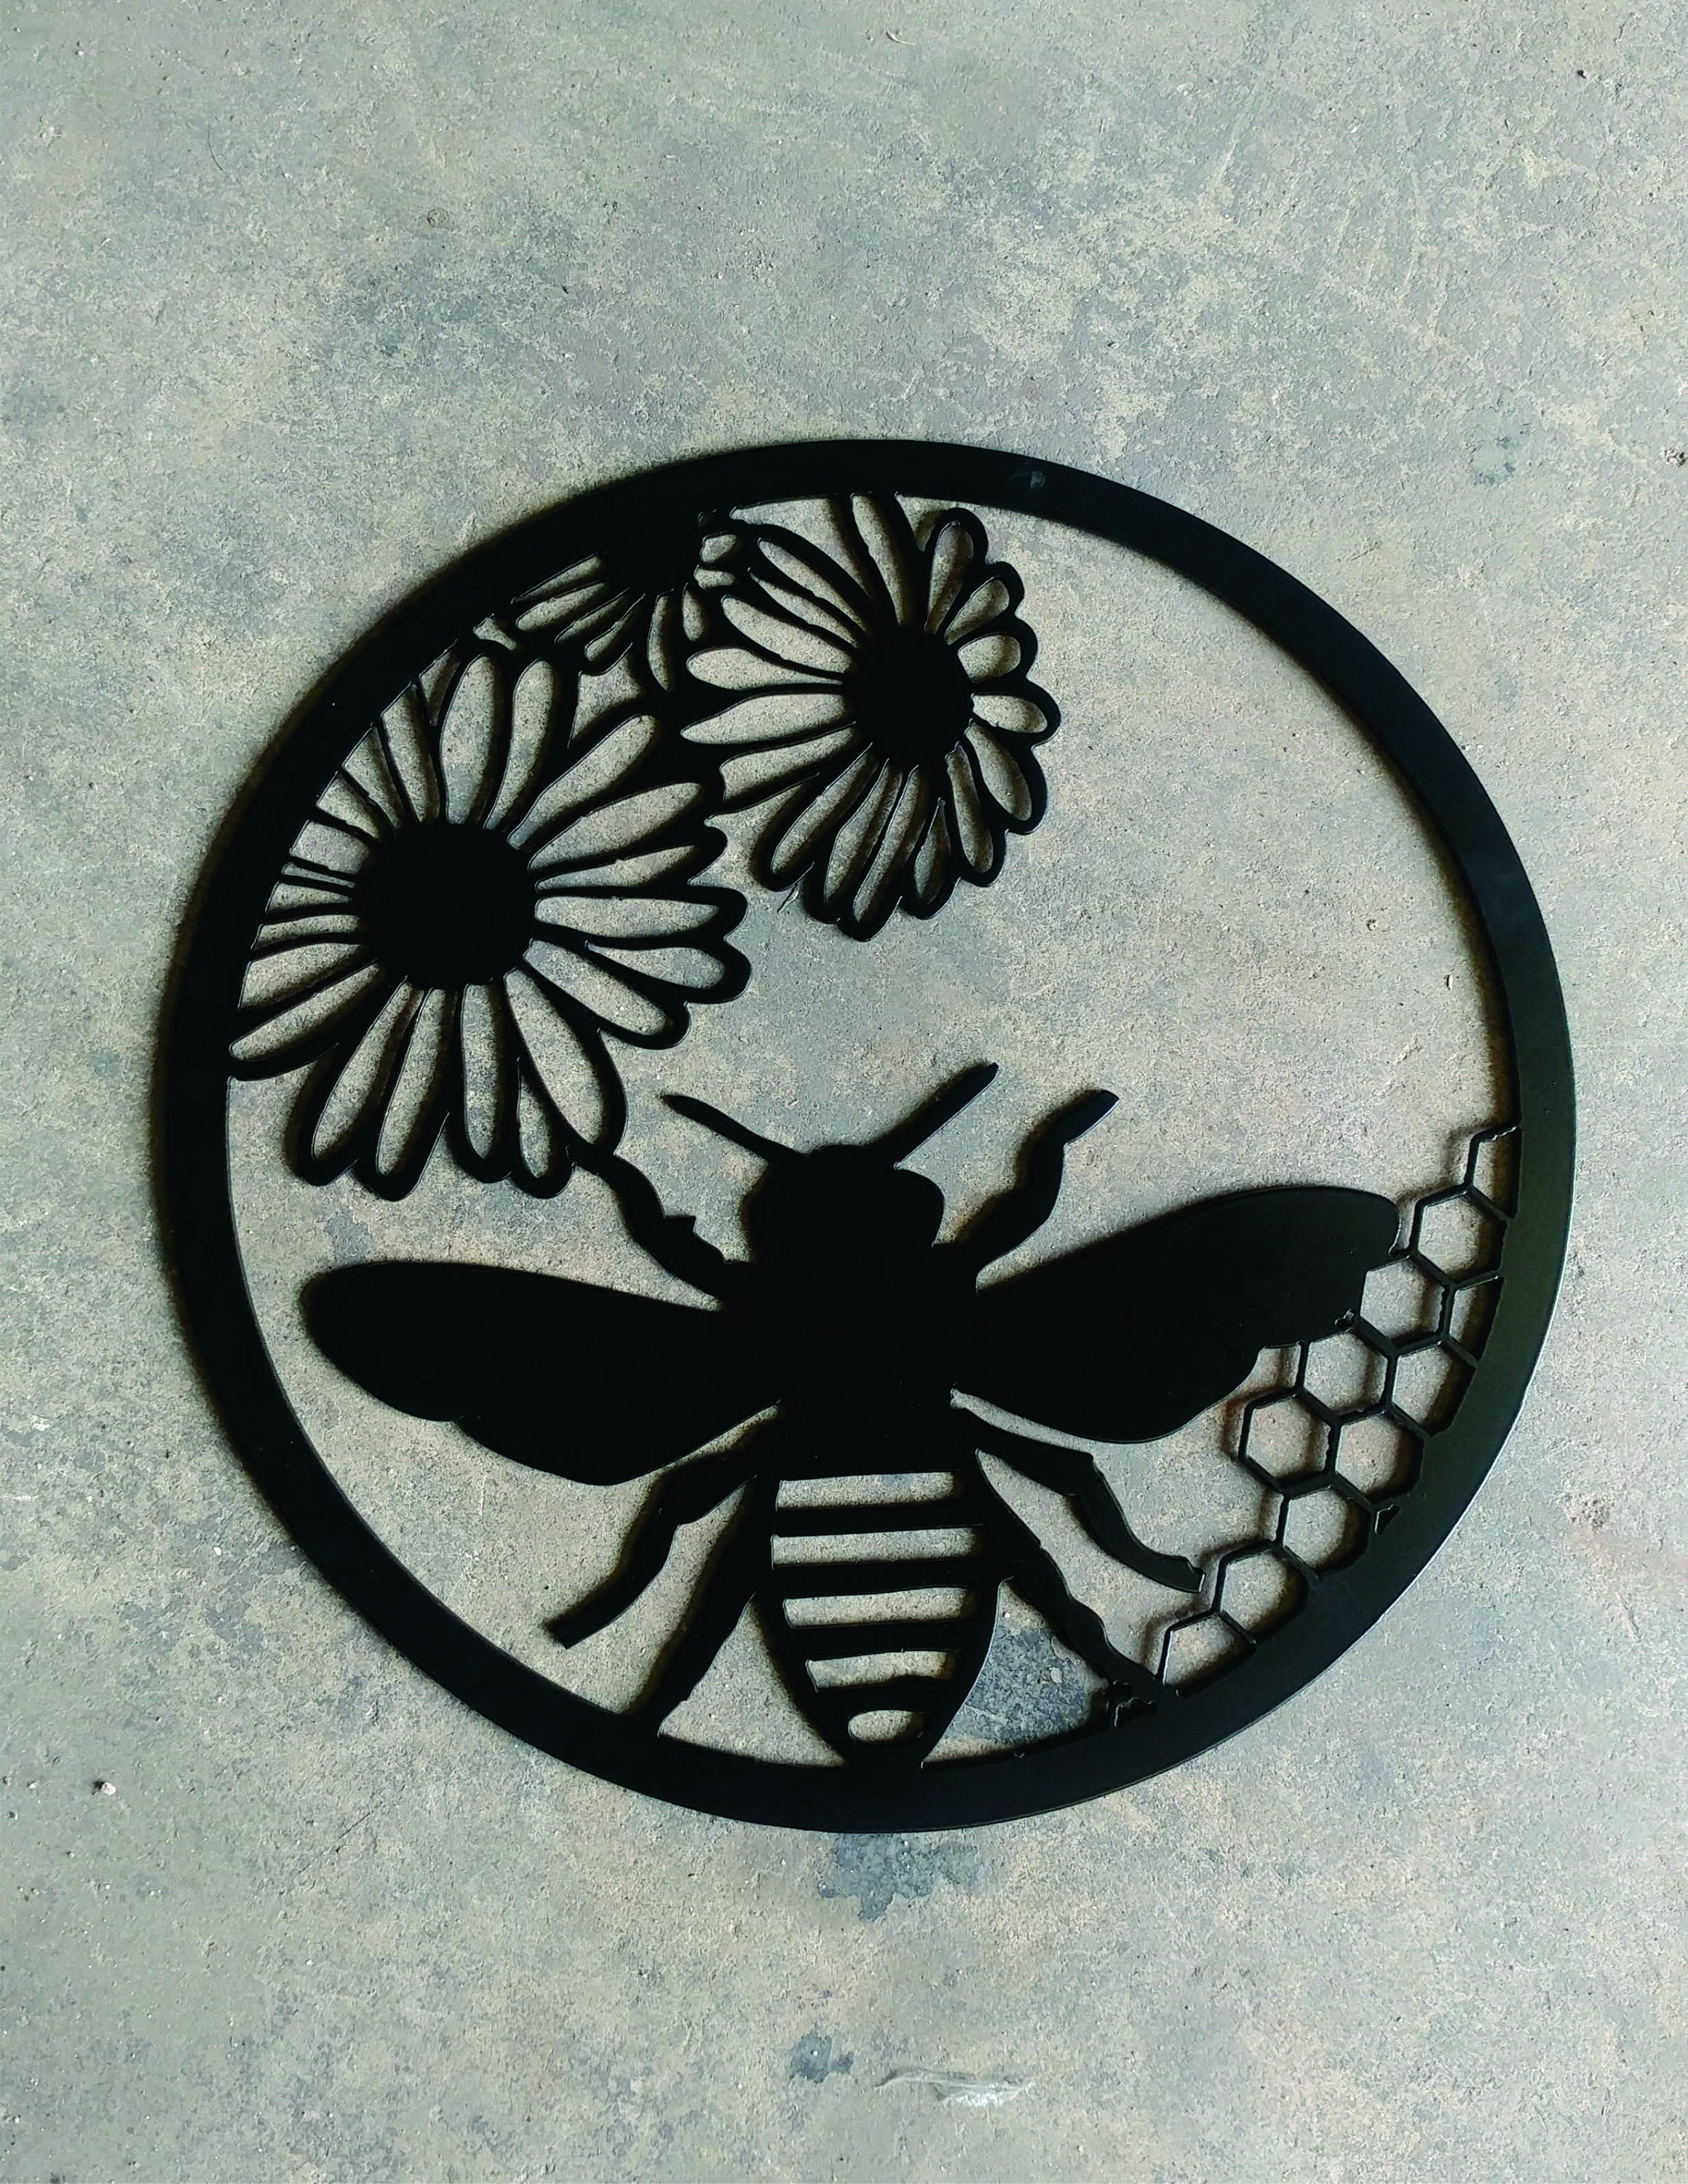 Honey Bee Wall Art or Yard Stake. Plasma Cut Metal Sign or Yard Stake. 